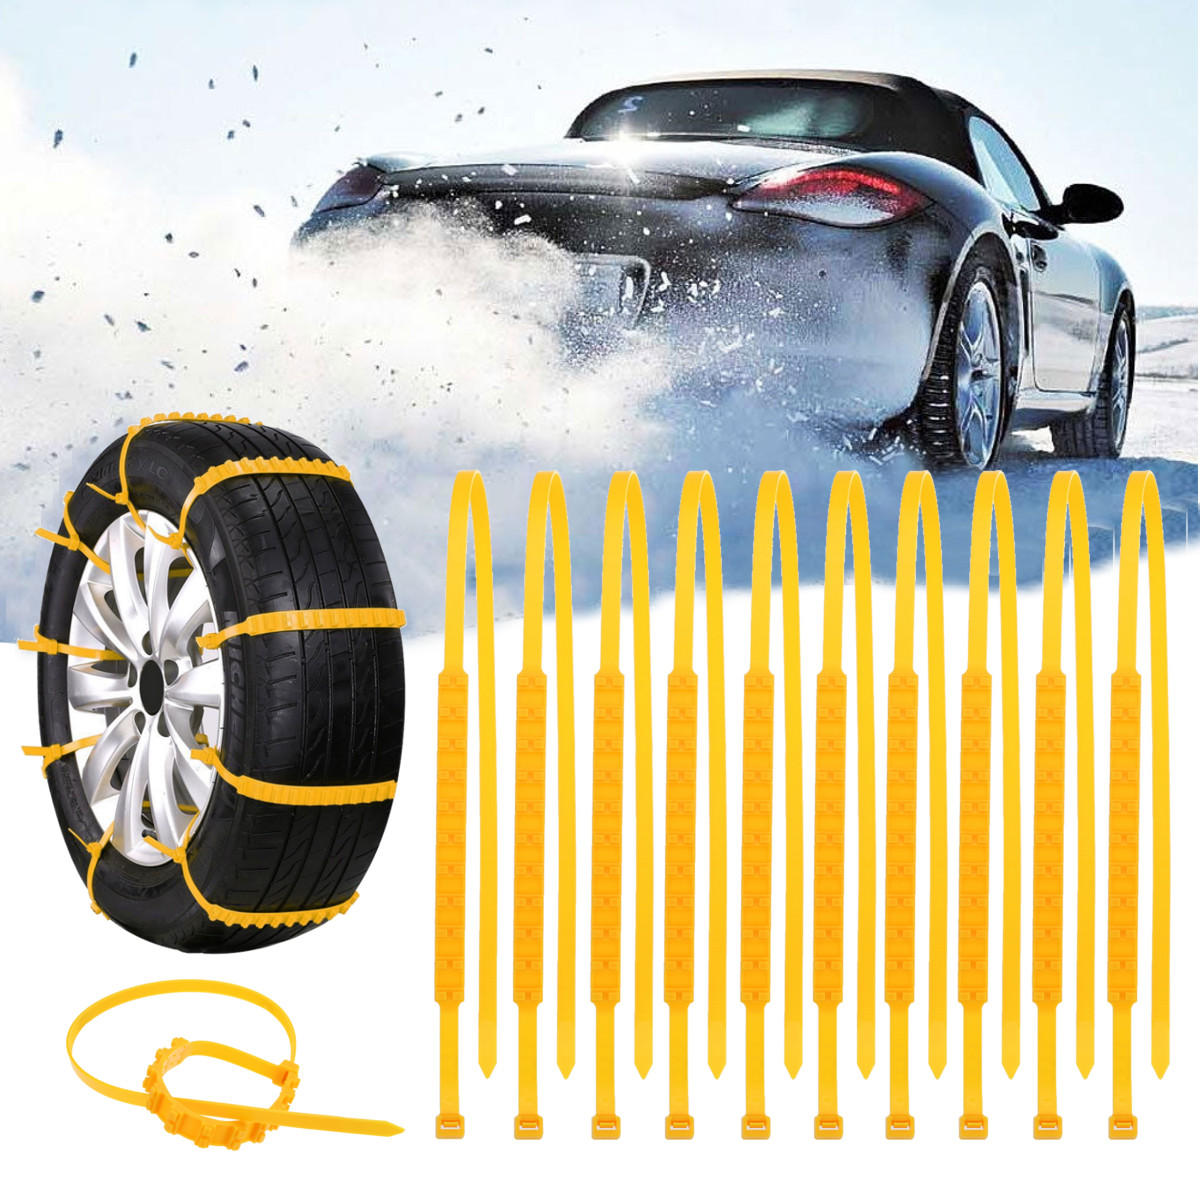 10 Pcs Automobiles Accessories Anti Slip Tyre Chain Anti-skid Car Mud Snow Chain Car Wheel Belt Winter Non Slip Tires for Car Emergency Use